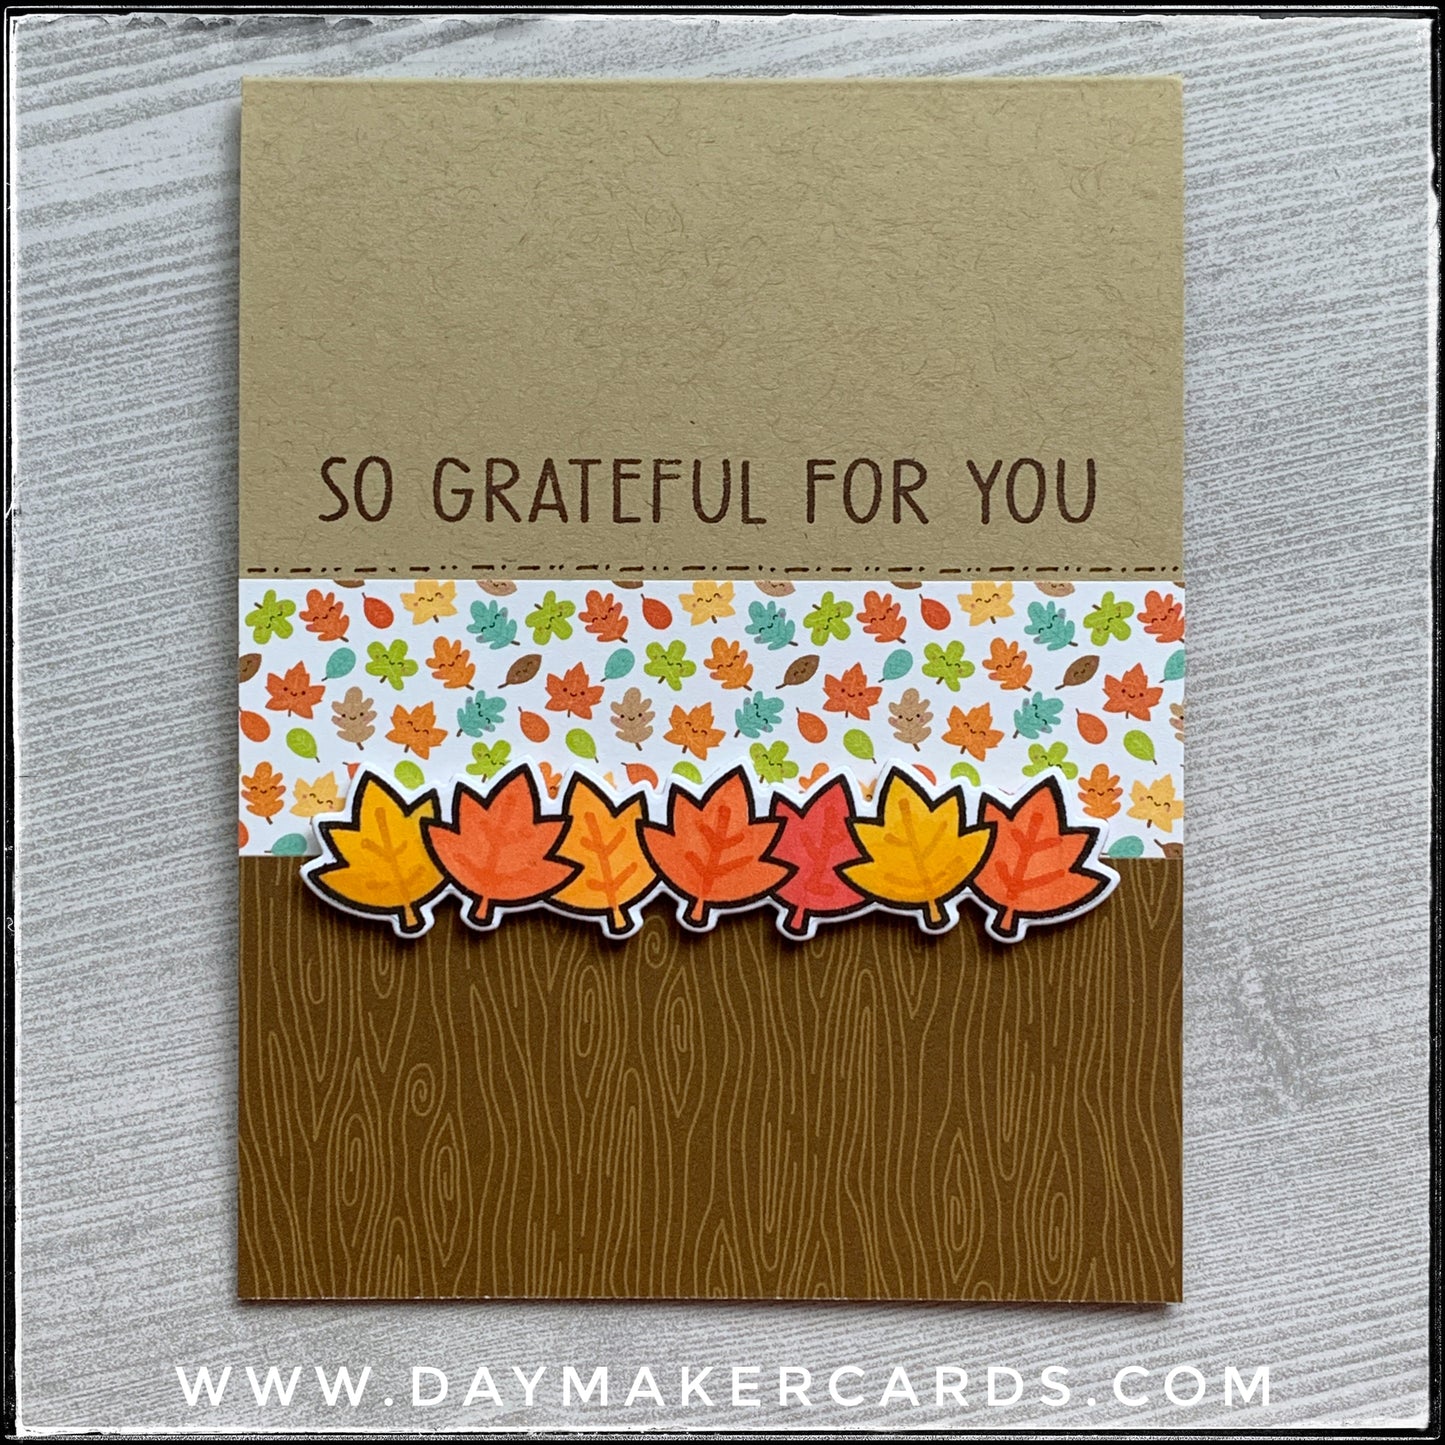 So Grateful For You Handmade Card